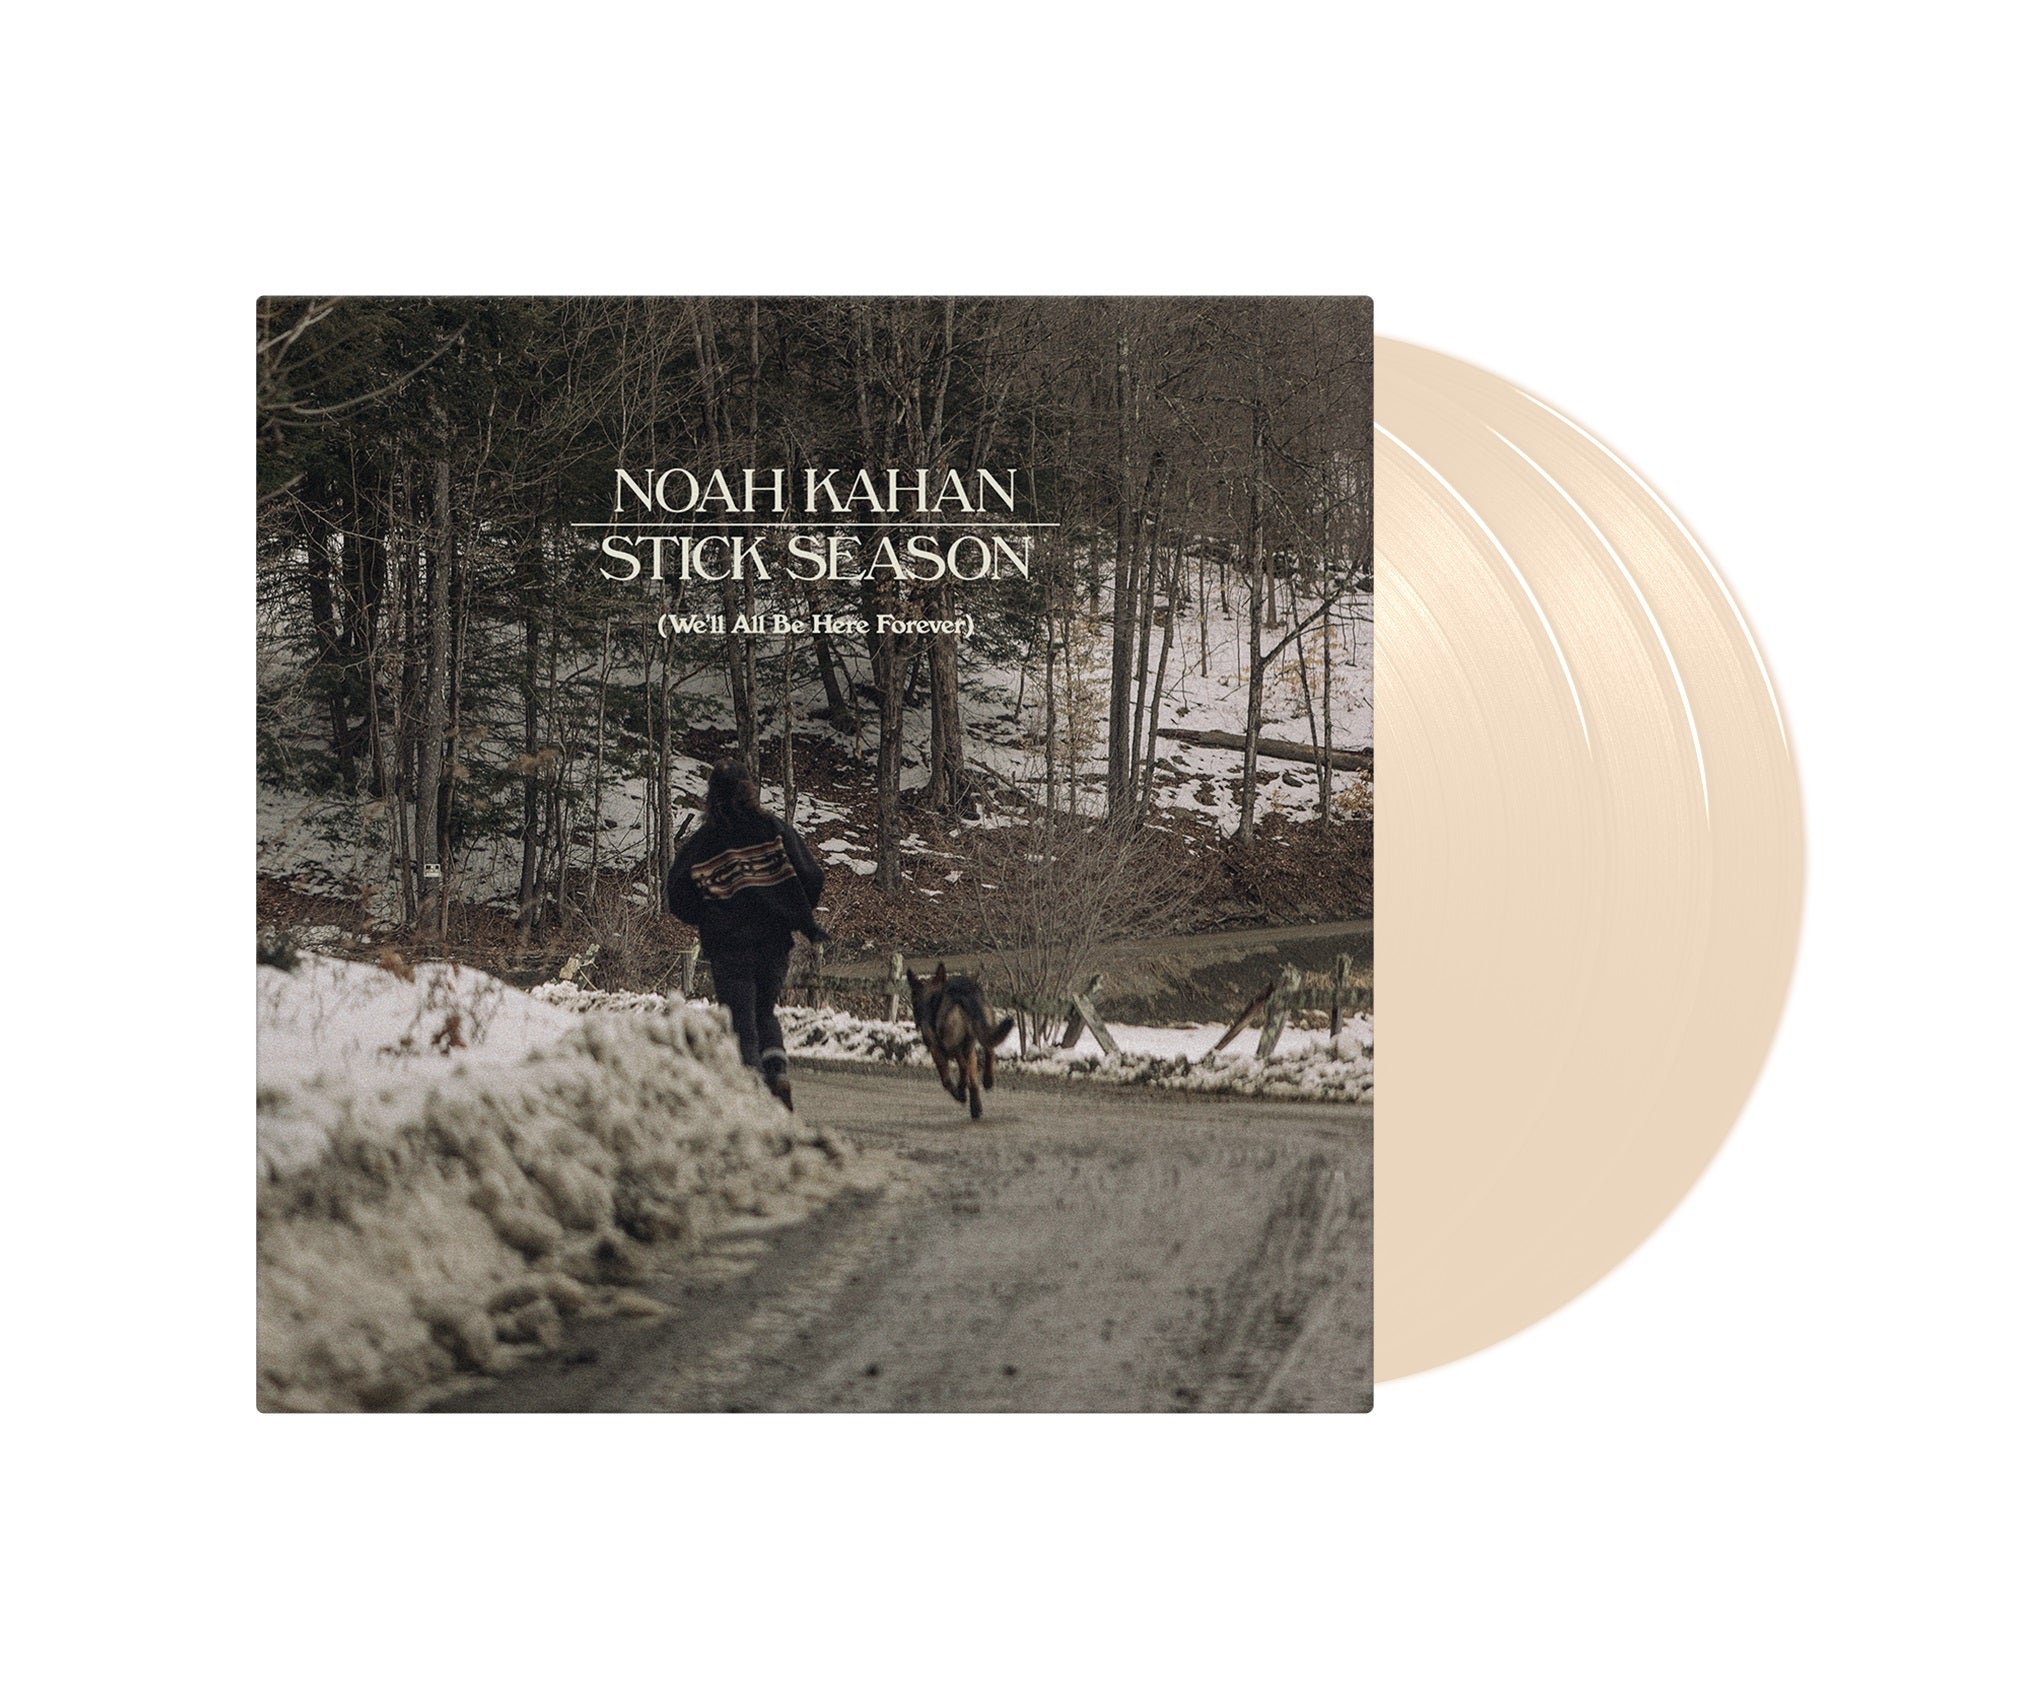 [DAMAGED] Noah Kahan - Stick Season (We'll All Be Here Forever) [Indie-Exclusive 3-lp Bone Vinyl]